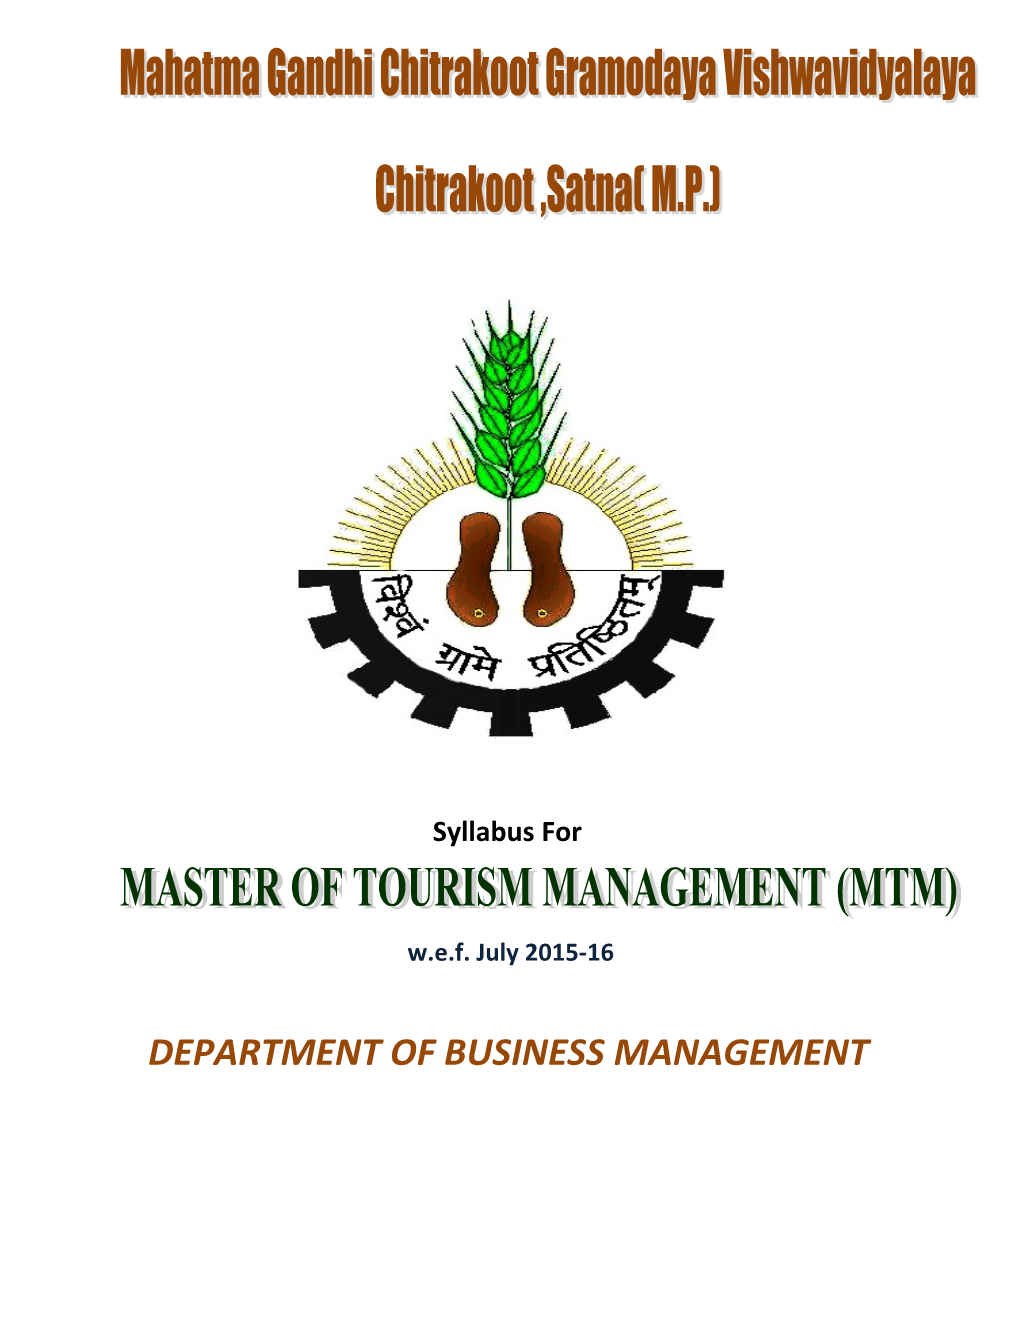 Master of Tourism Management